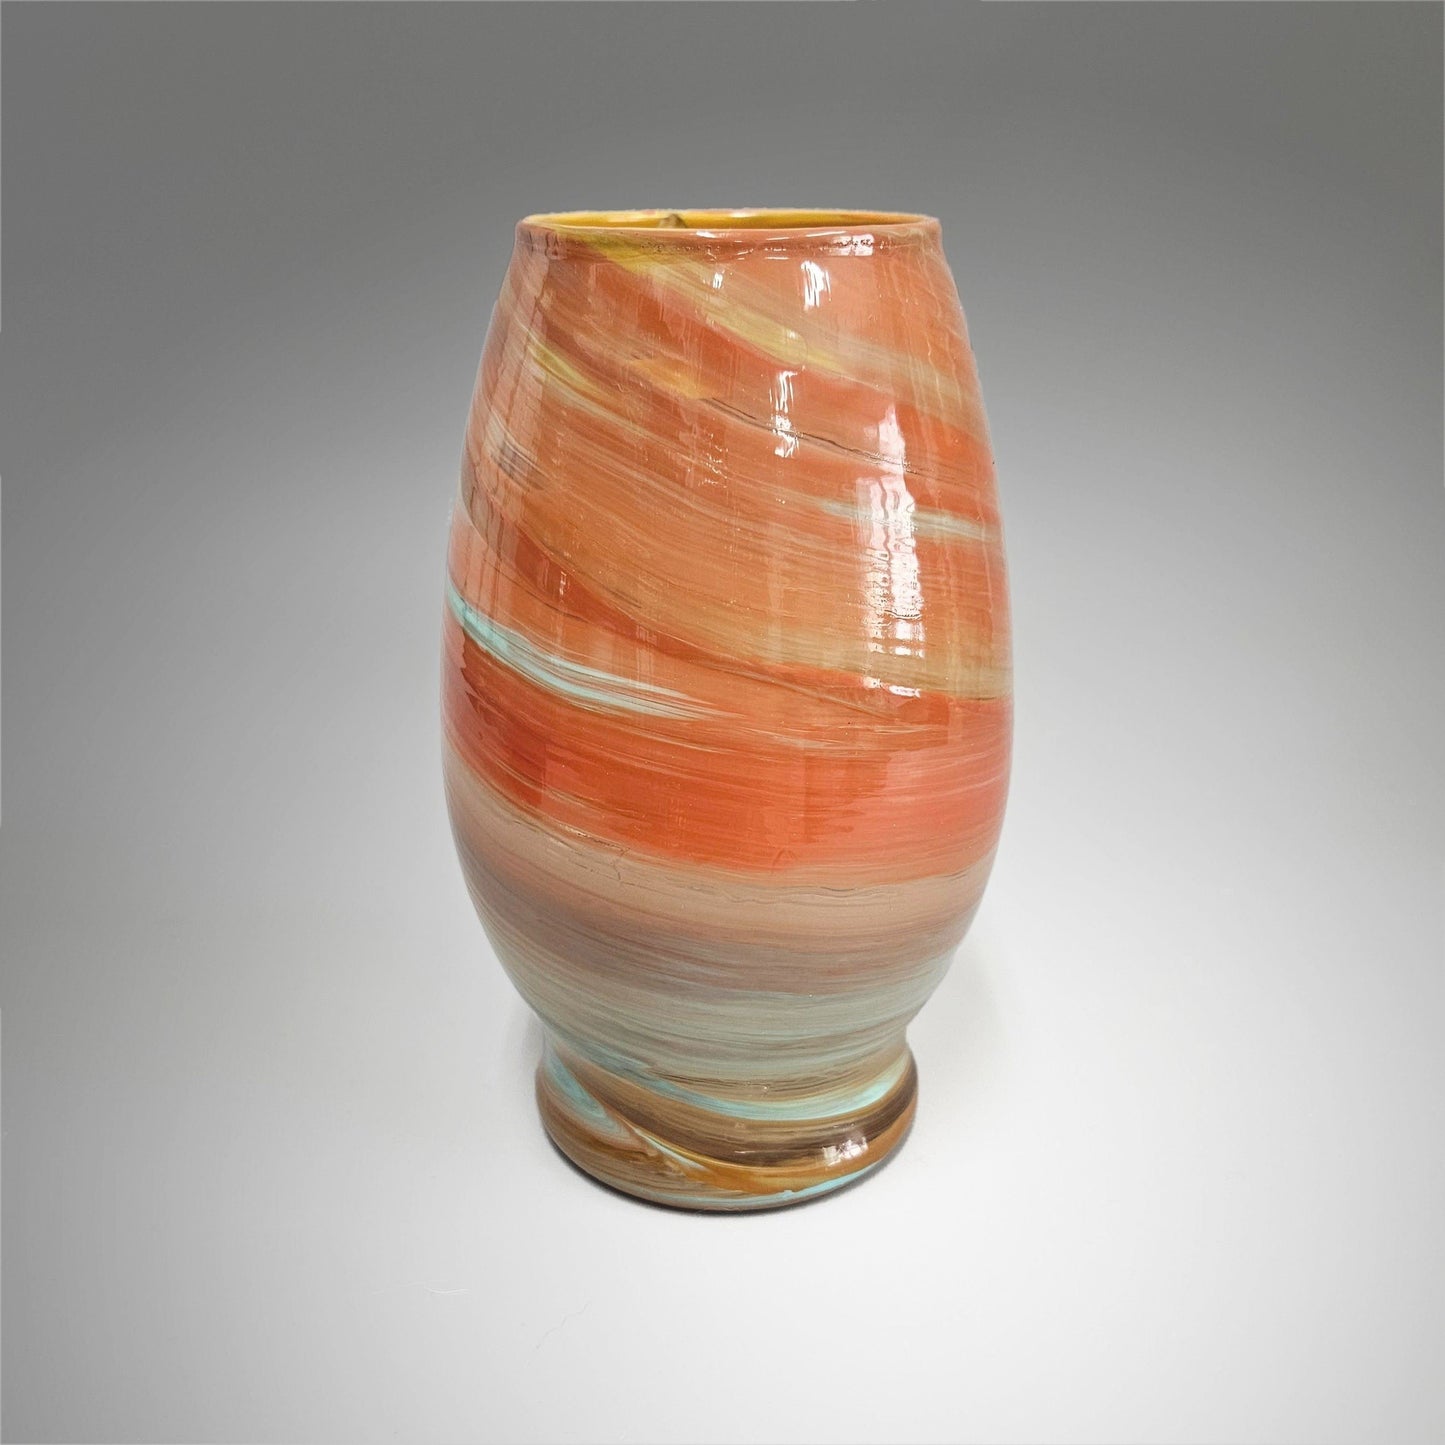 Fluid Art Painted Glass Vase in Terra Cotta